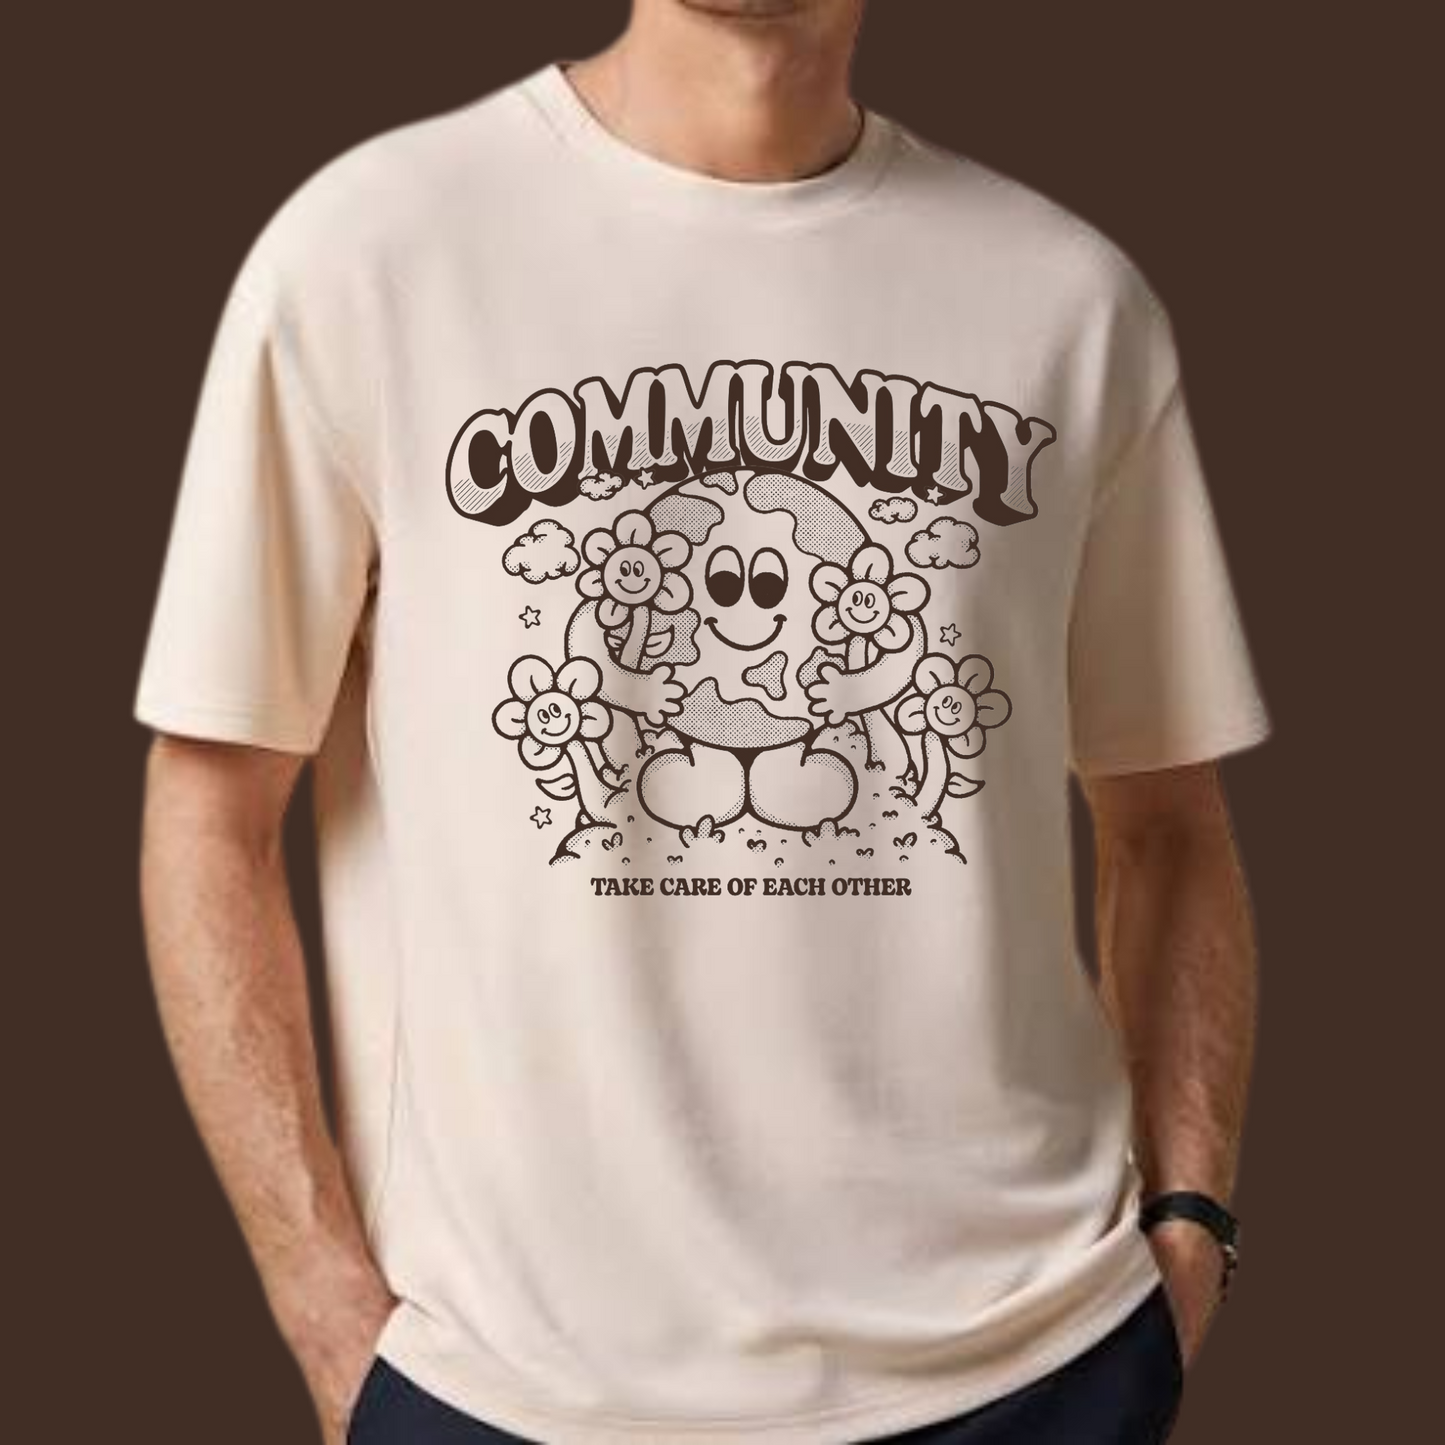 Community shirt